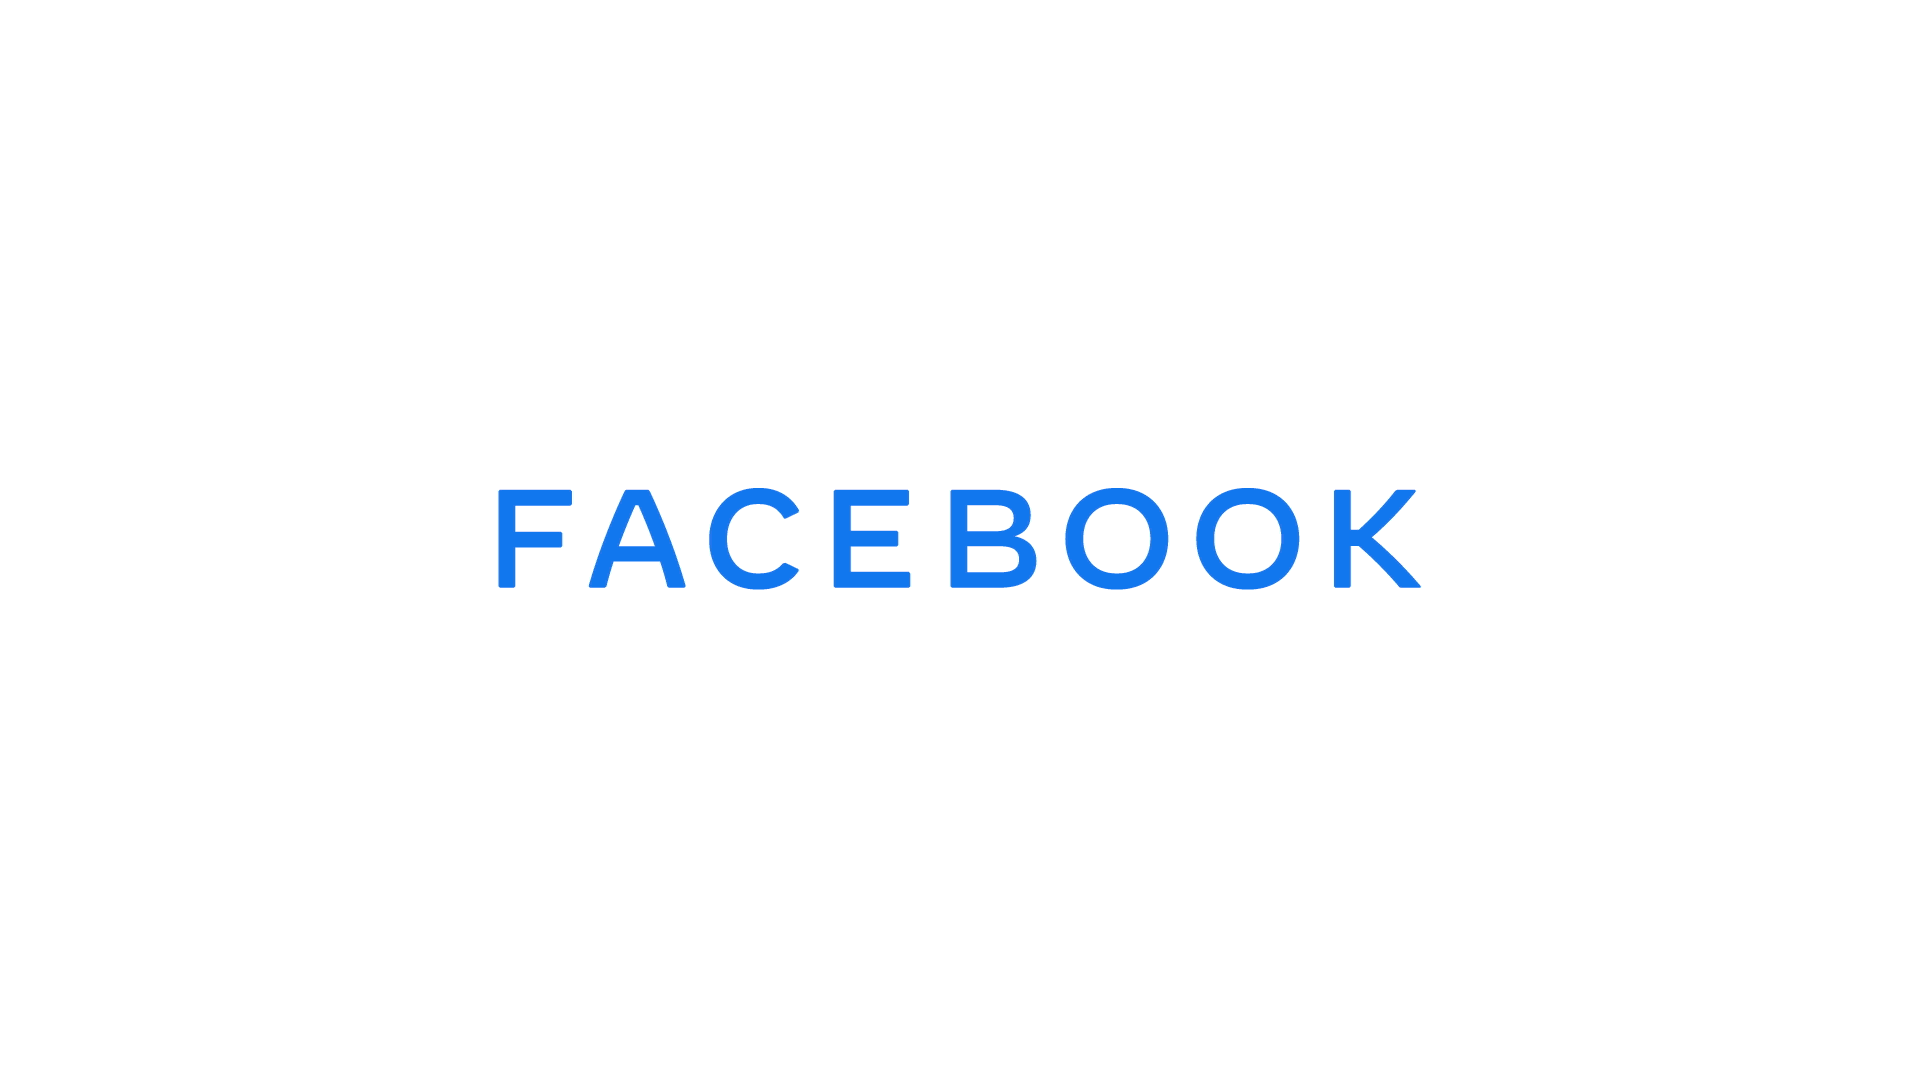  company part rebranding efforts logo introduces facebook 